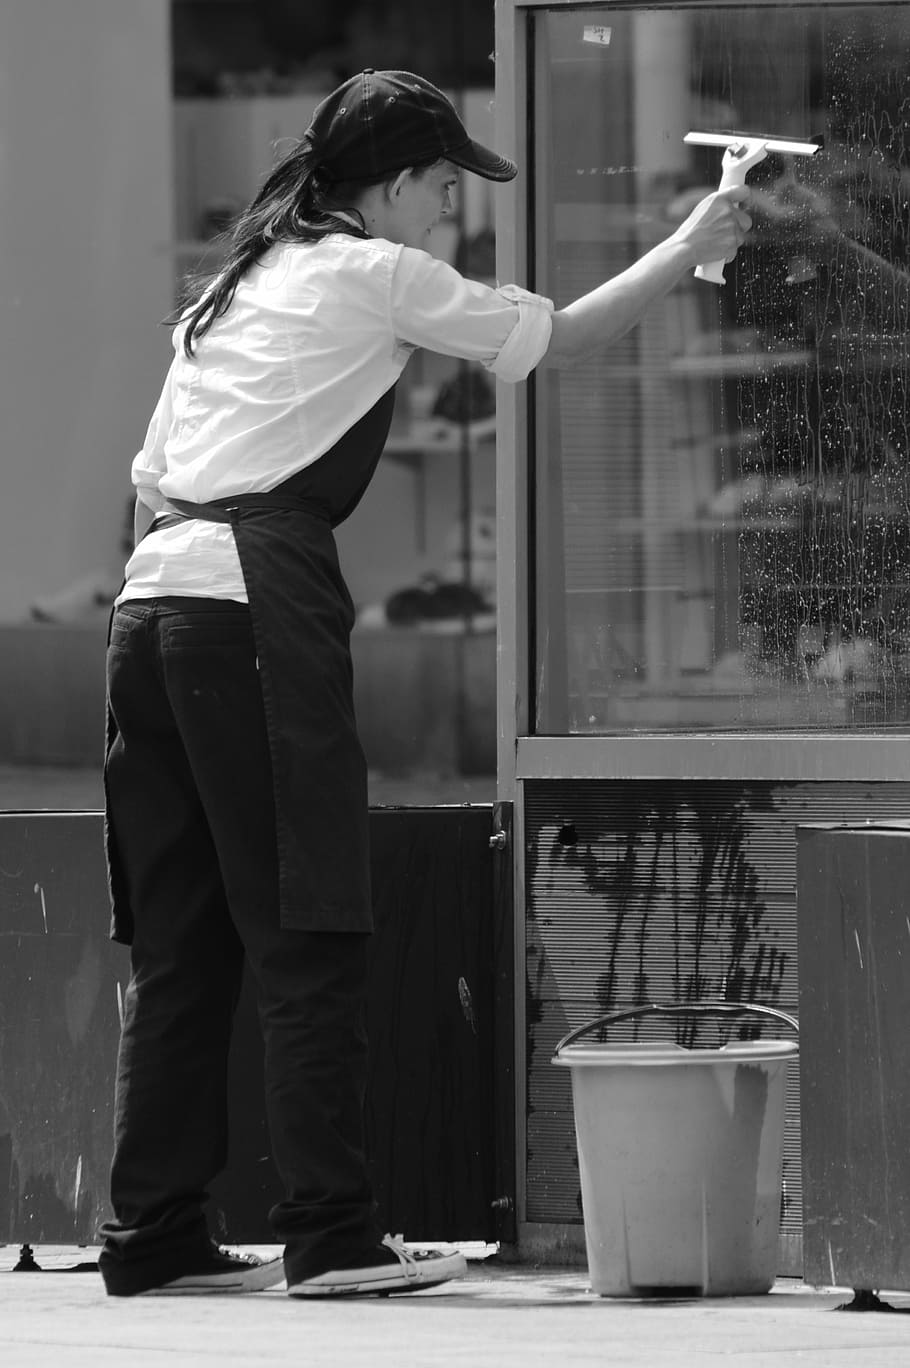 fotografi abu-abu, jendela pembersih wanita, ruitenwas, glazenwas, ember, subtrahend, wanita, orang-orang, pekerjaan, pembersih jendela